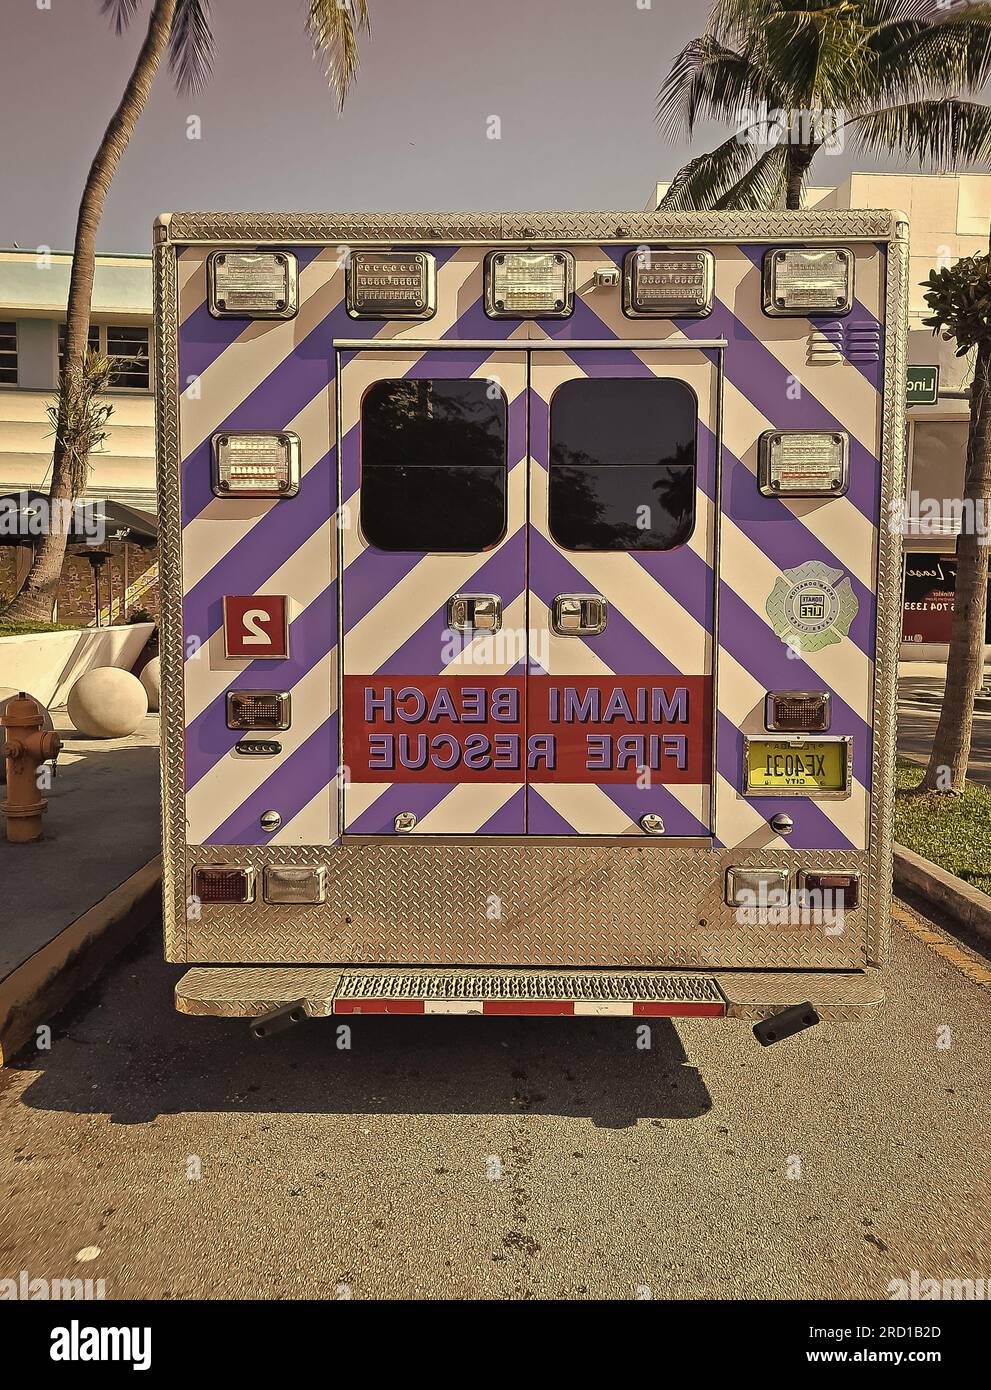 Los Angeles, California USA - March 24, 2021: miami beach fire rescue car back view Stock Photo